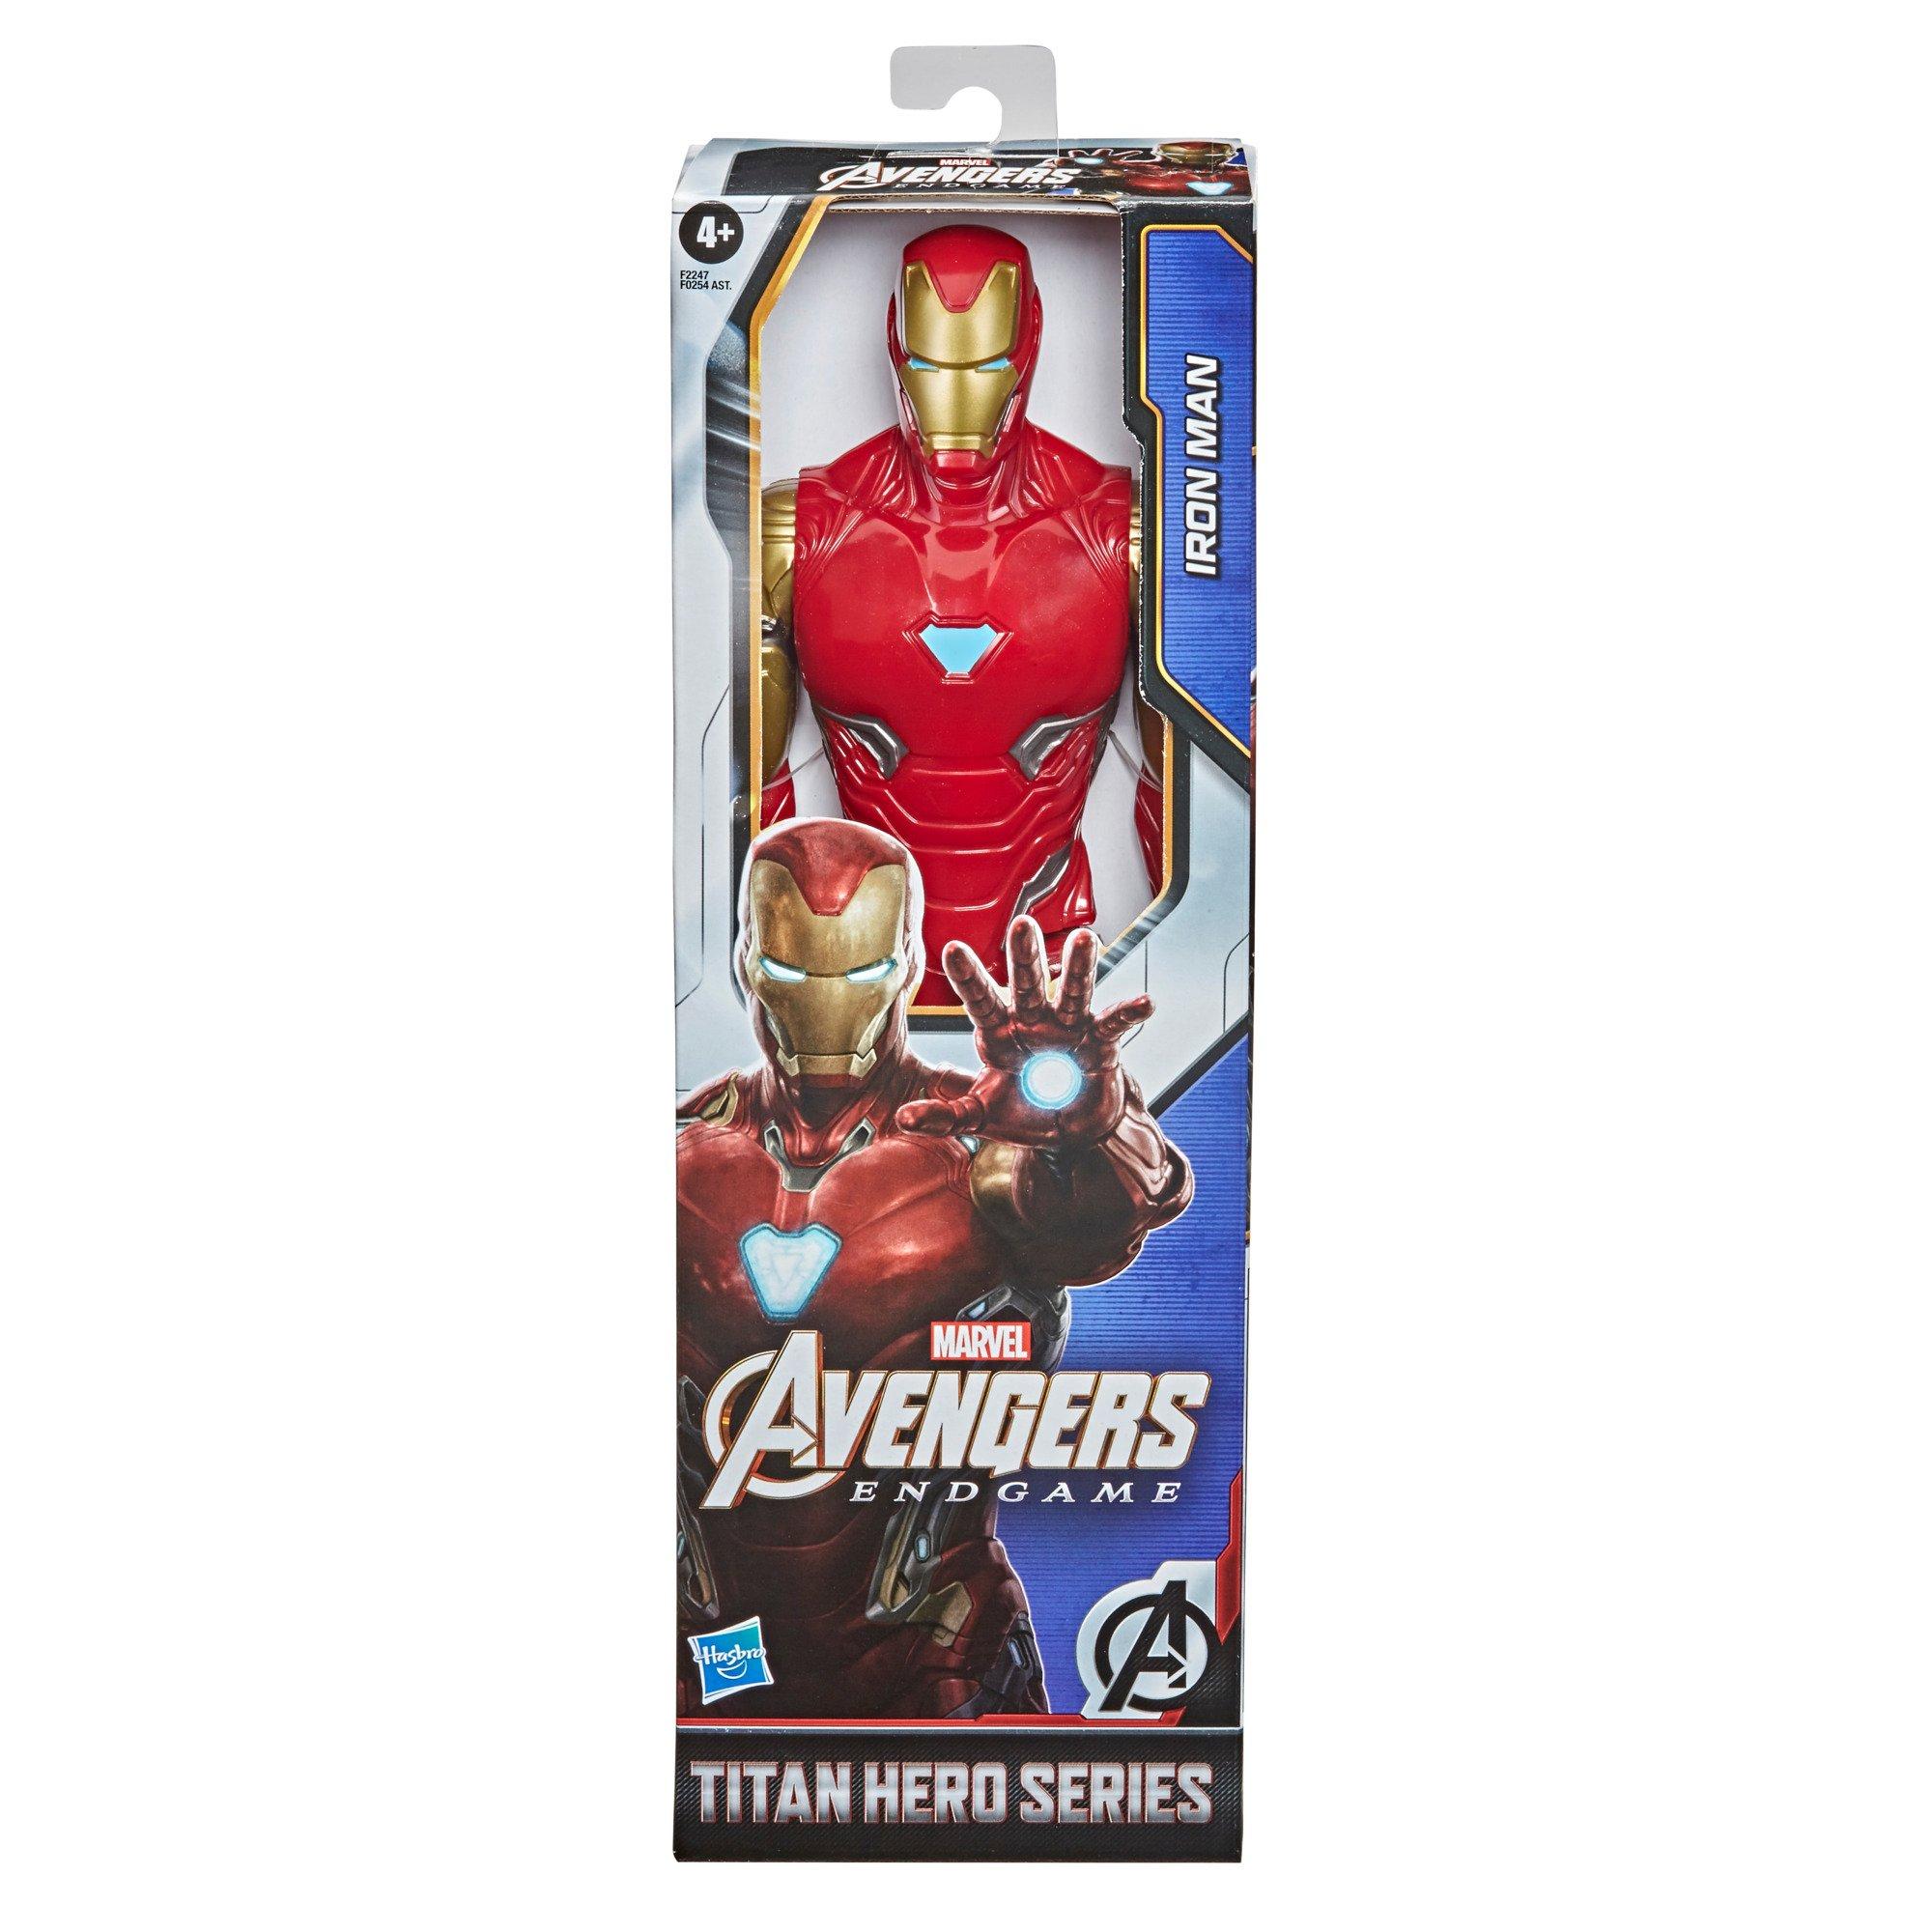 Marvel's Avengers Endgame Titan 12 inch Figure Iron Man Black and Gold New 